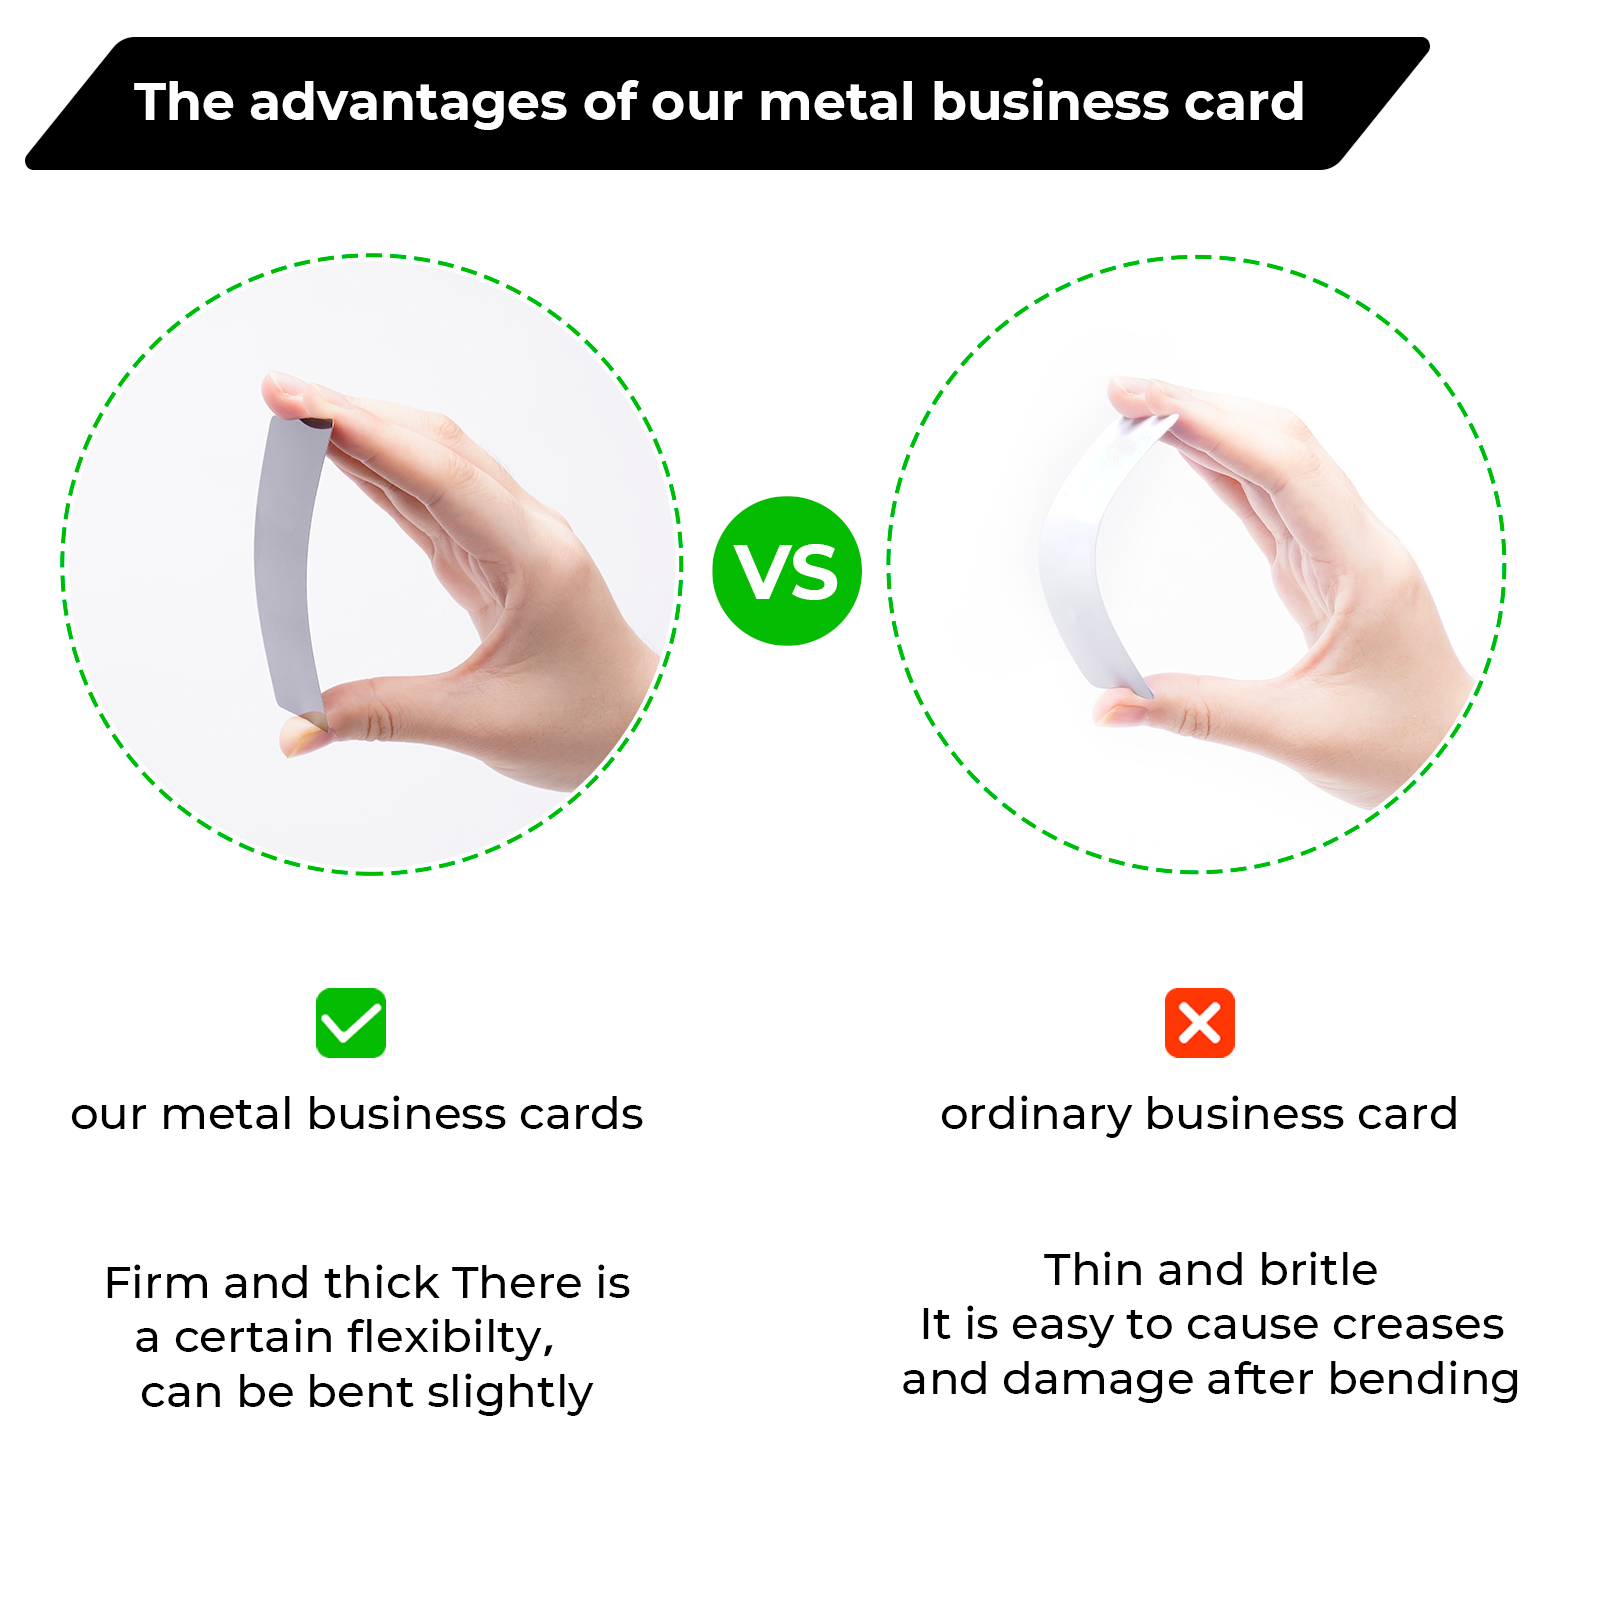 Red Aluminum Business Cards (60pcs)